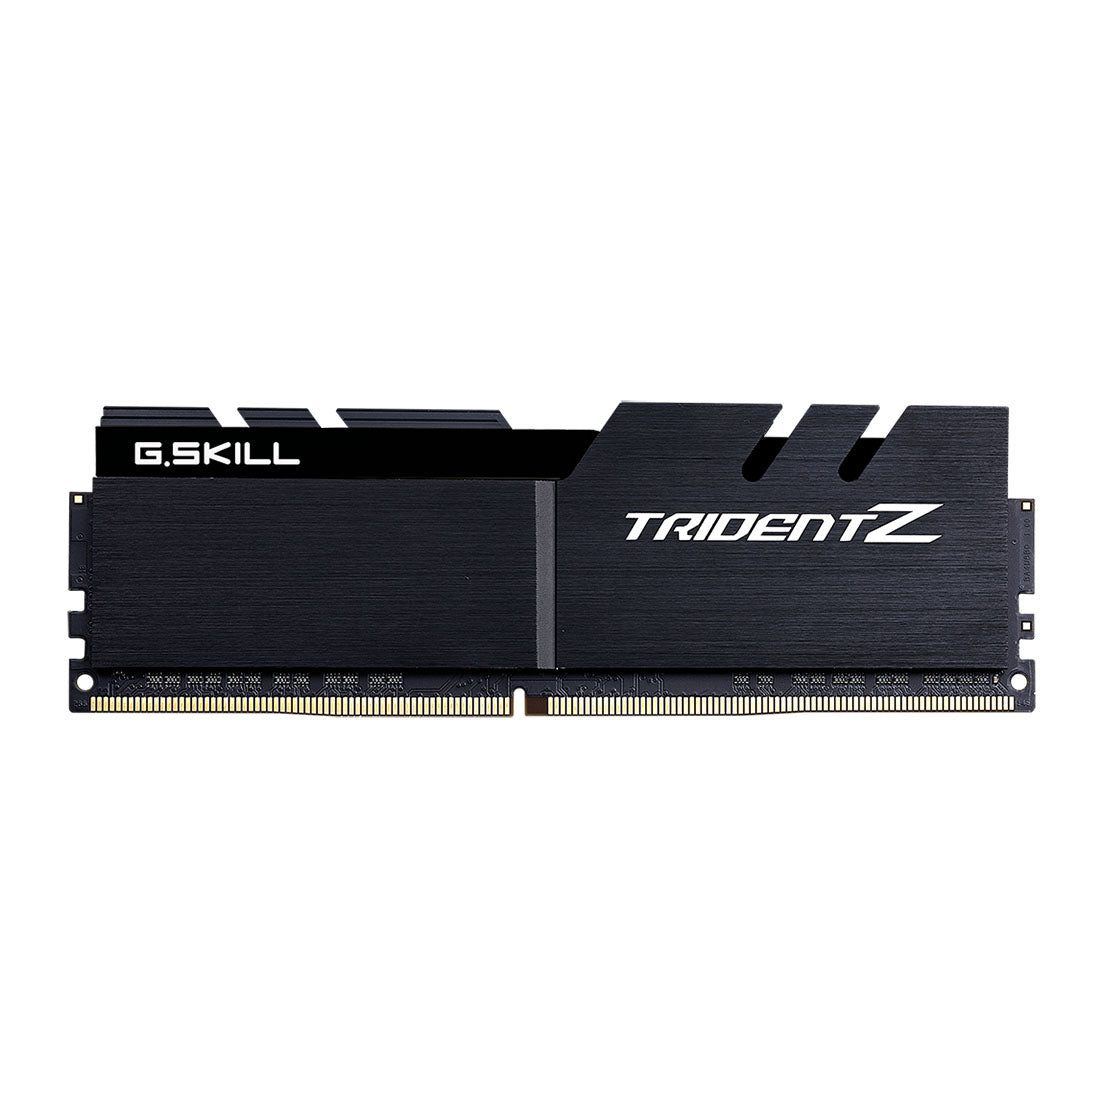 G.SKILL ट्राइडेंट Z 16GB(2x8GB) DDR4 RAM 4400MHz डेस्कटॉप मेमोरी